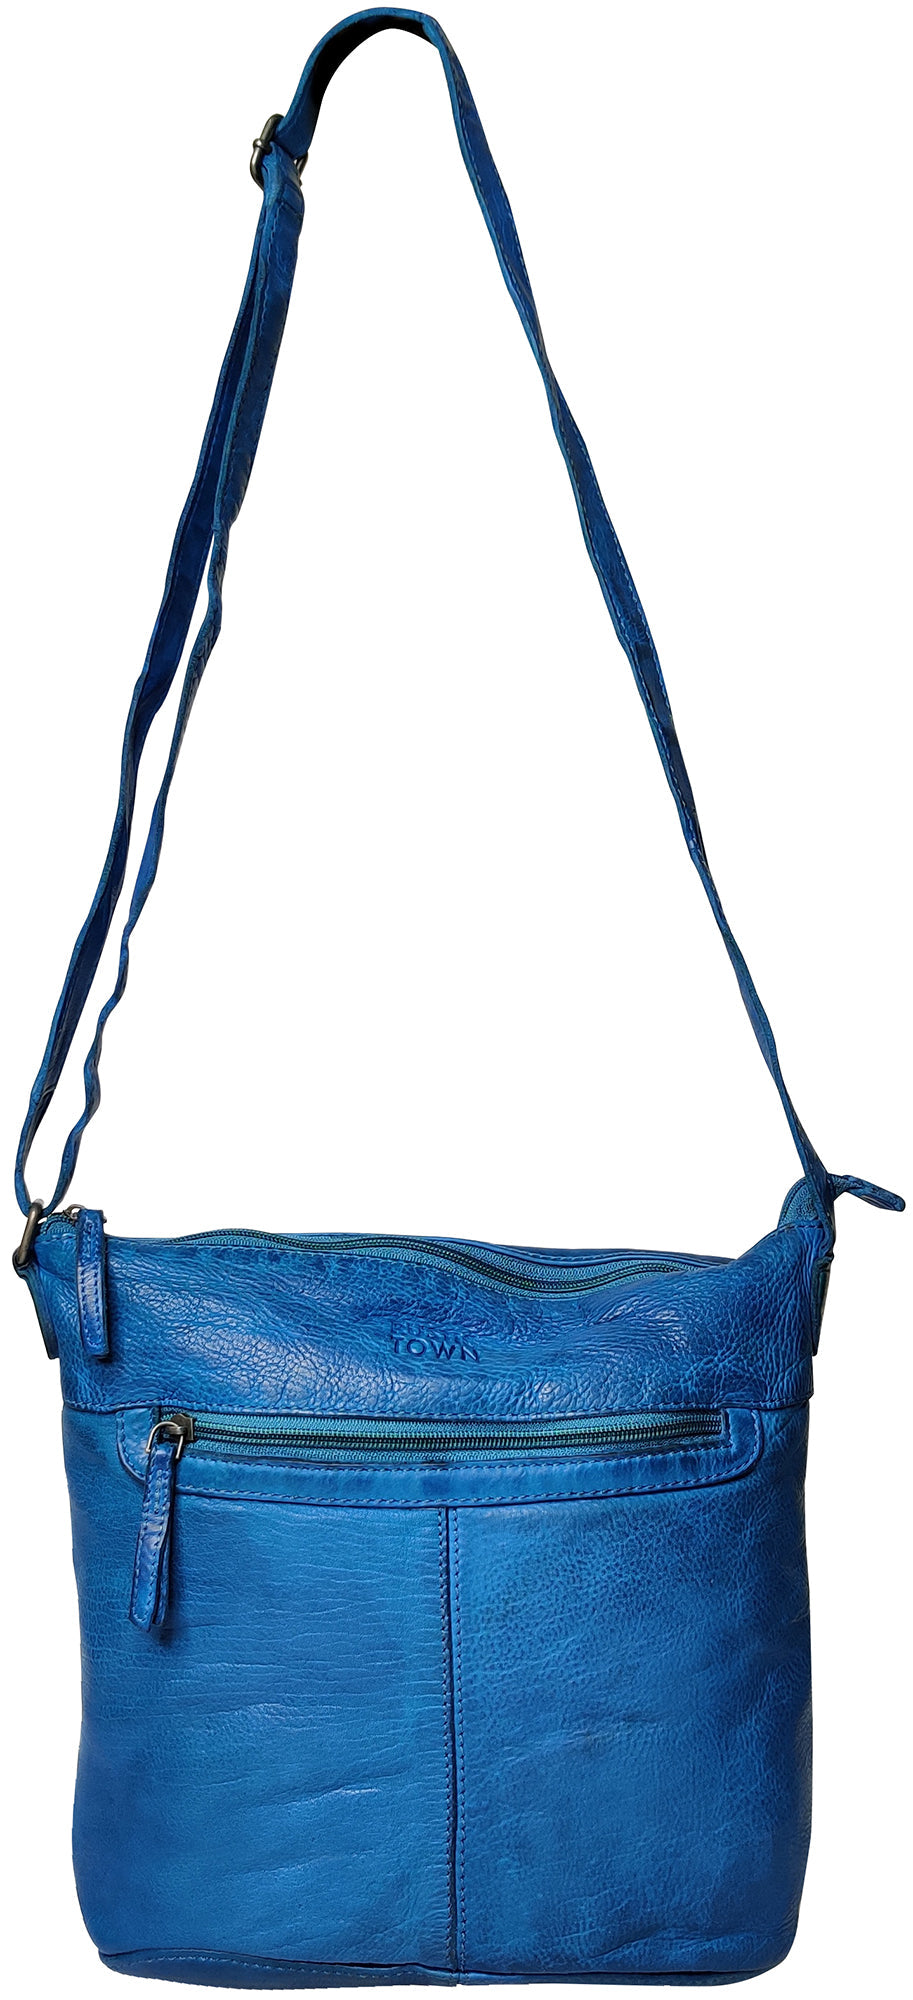 Leather Sling Bag for Women, Petrol Blue